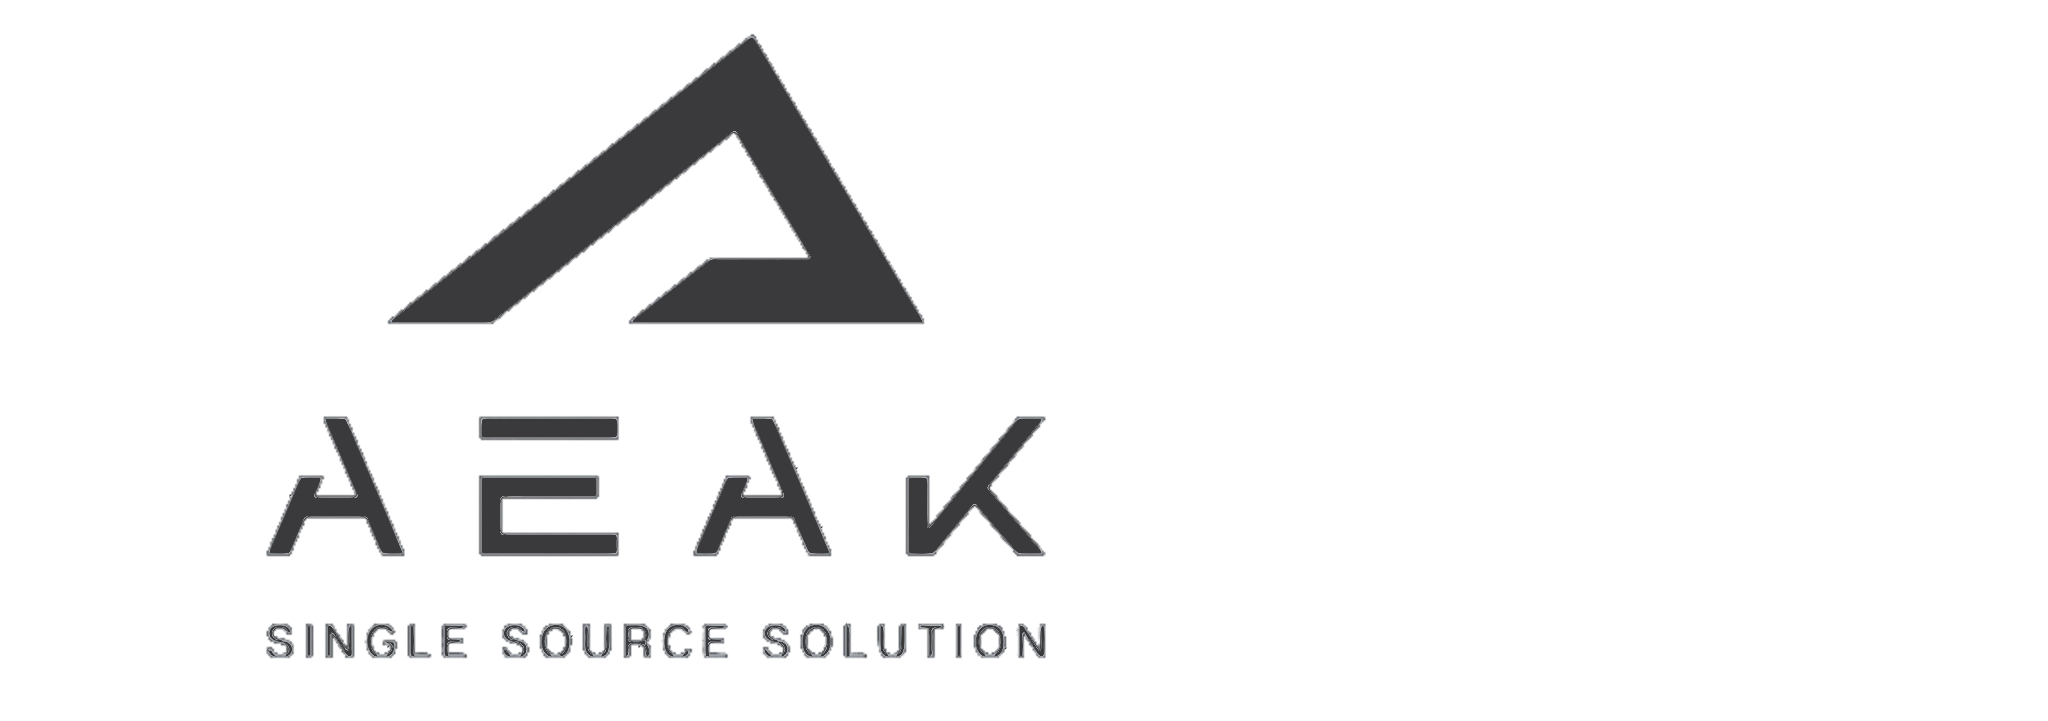 AEAK – SINGLE SOURCE SOLUTION